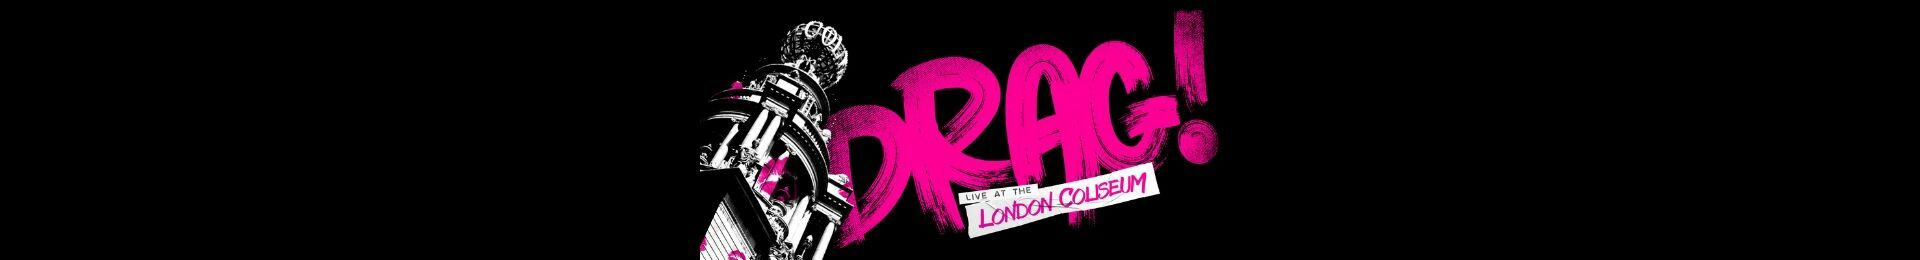 Drag! Live at the London Coliseum banner image